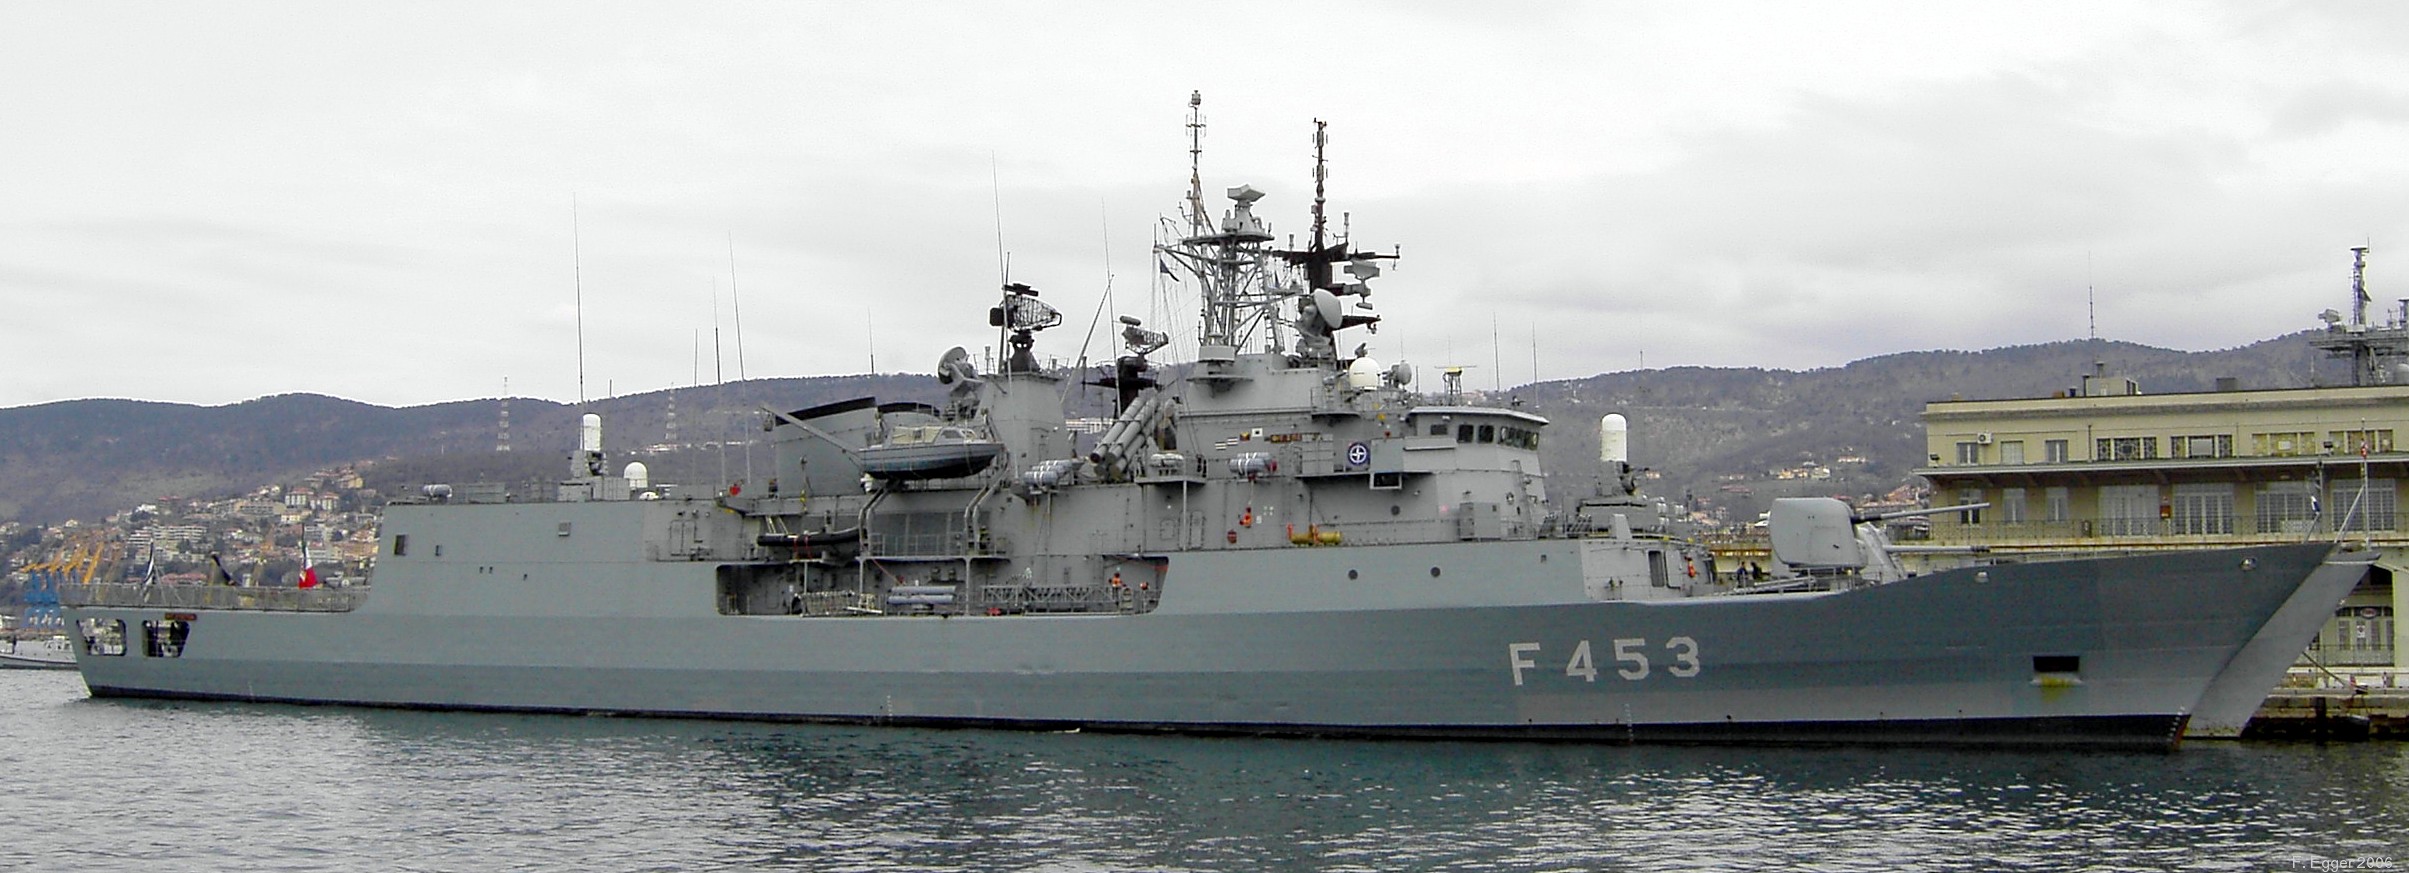 f 453 hs spetsai hydra class frigate meko-200hn hellenic navy greece standing nato response force maritime group 2 snmg-2 trieste italy 2006 03